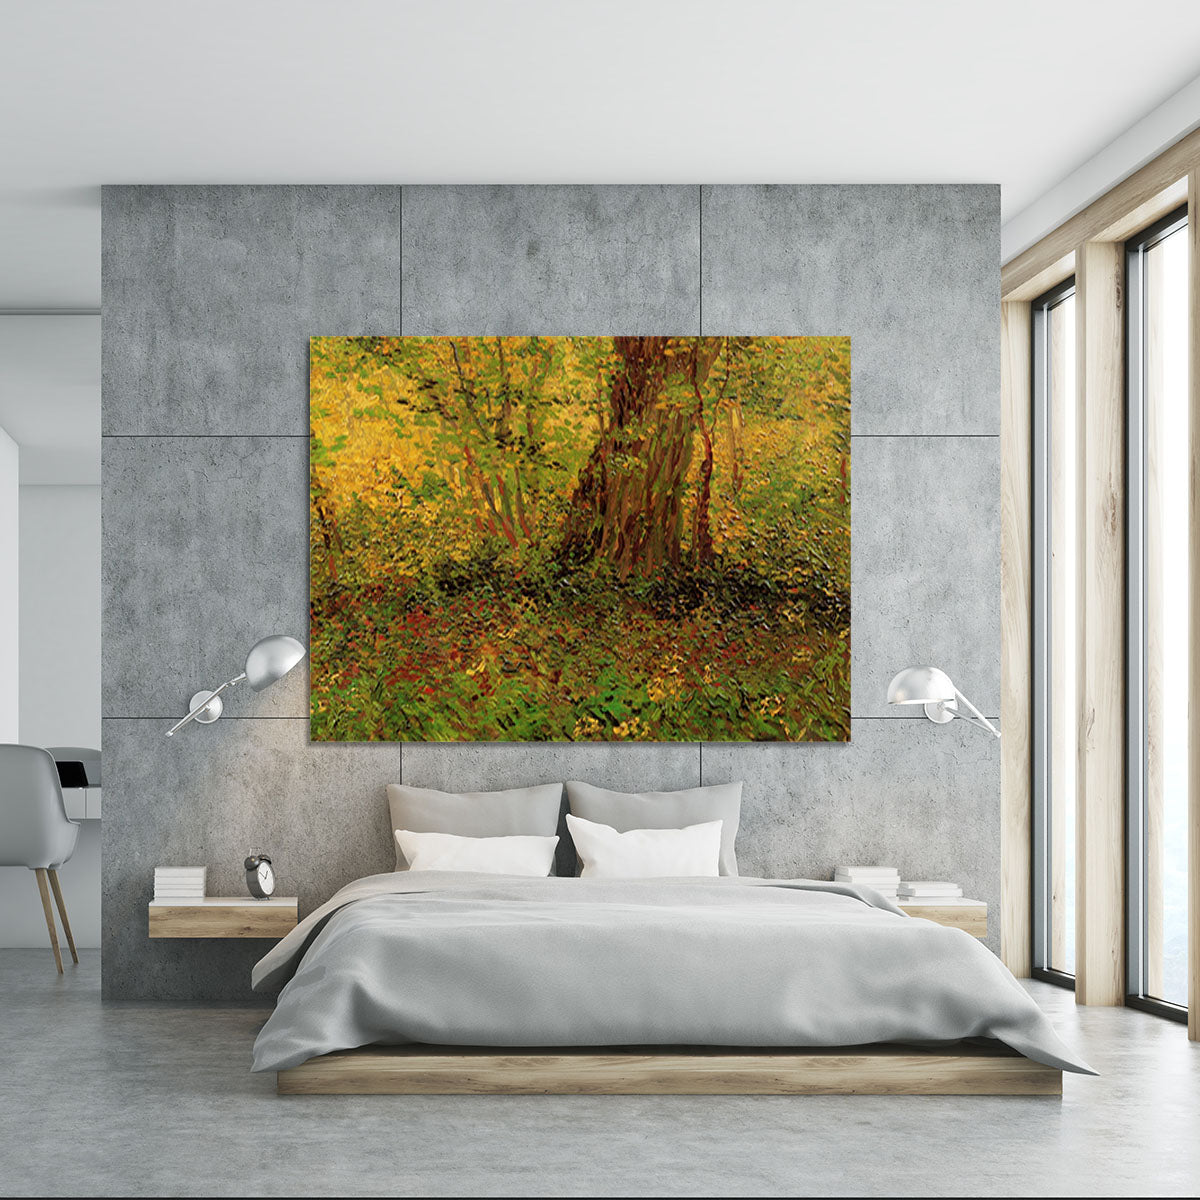 Undergrowth 2 by Van Gogh Canvas Print or Poster - Canvas Art Rocks - 5